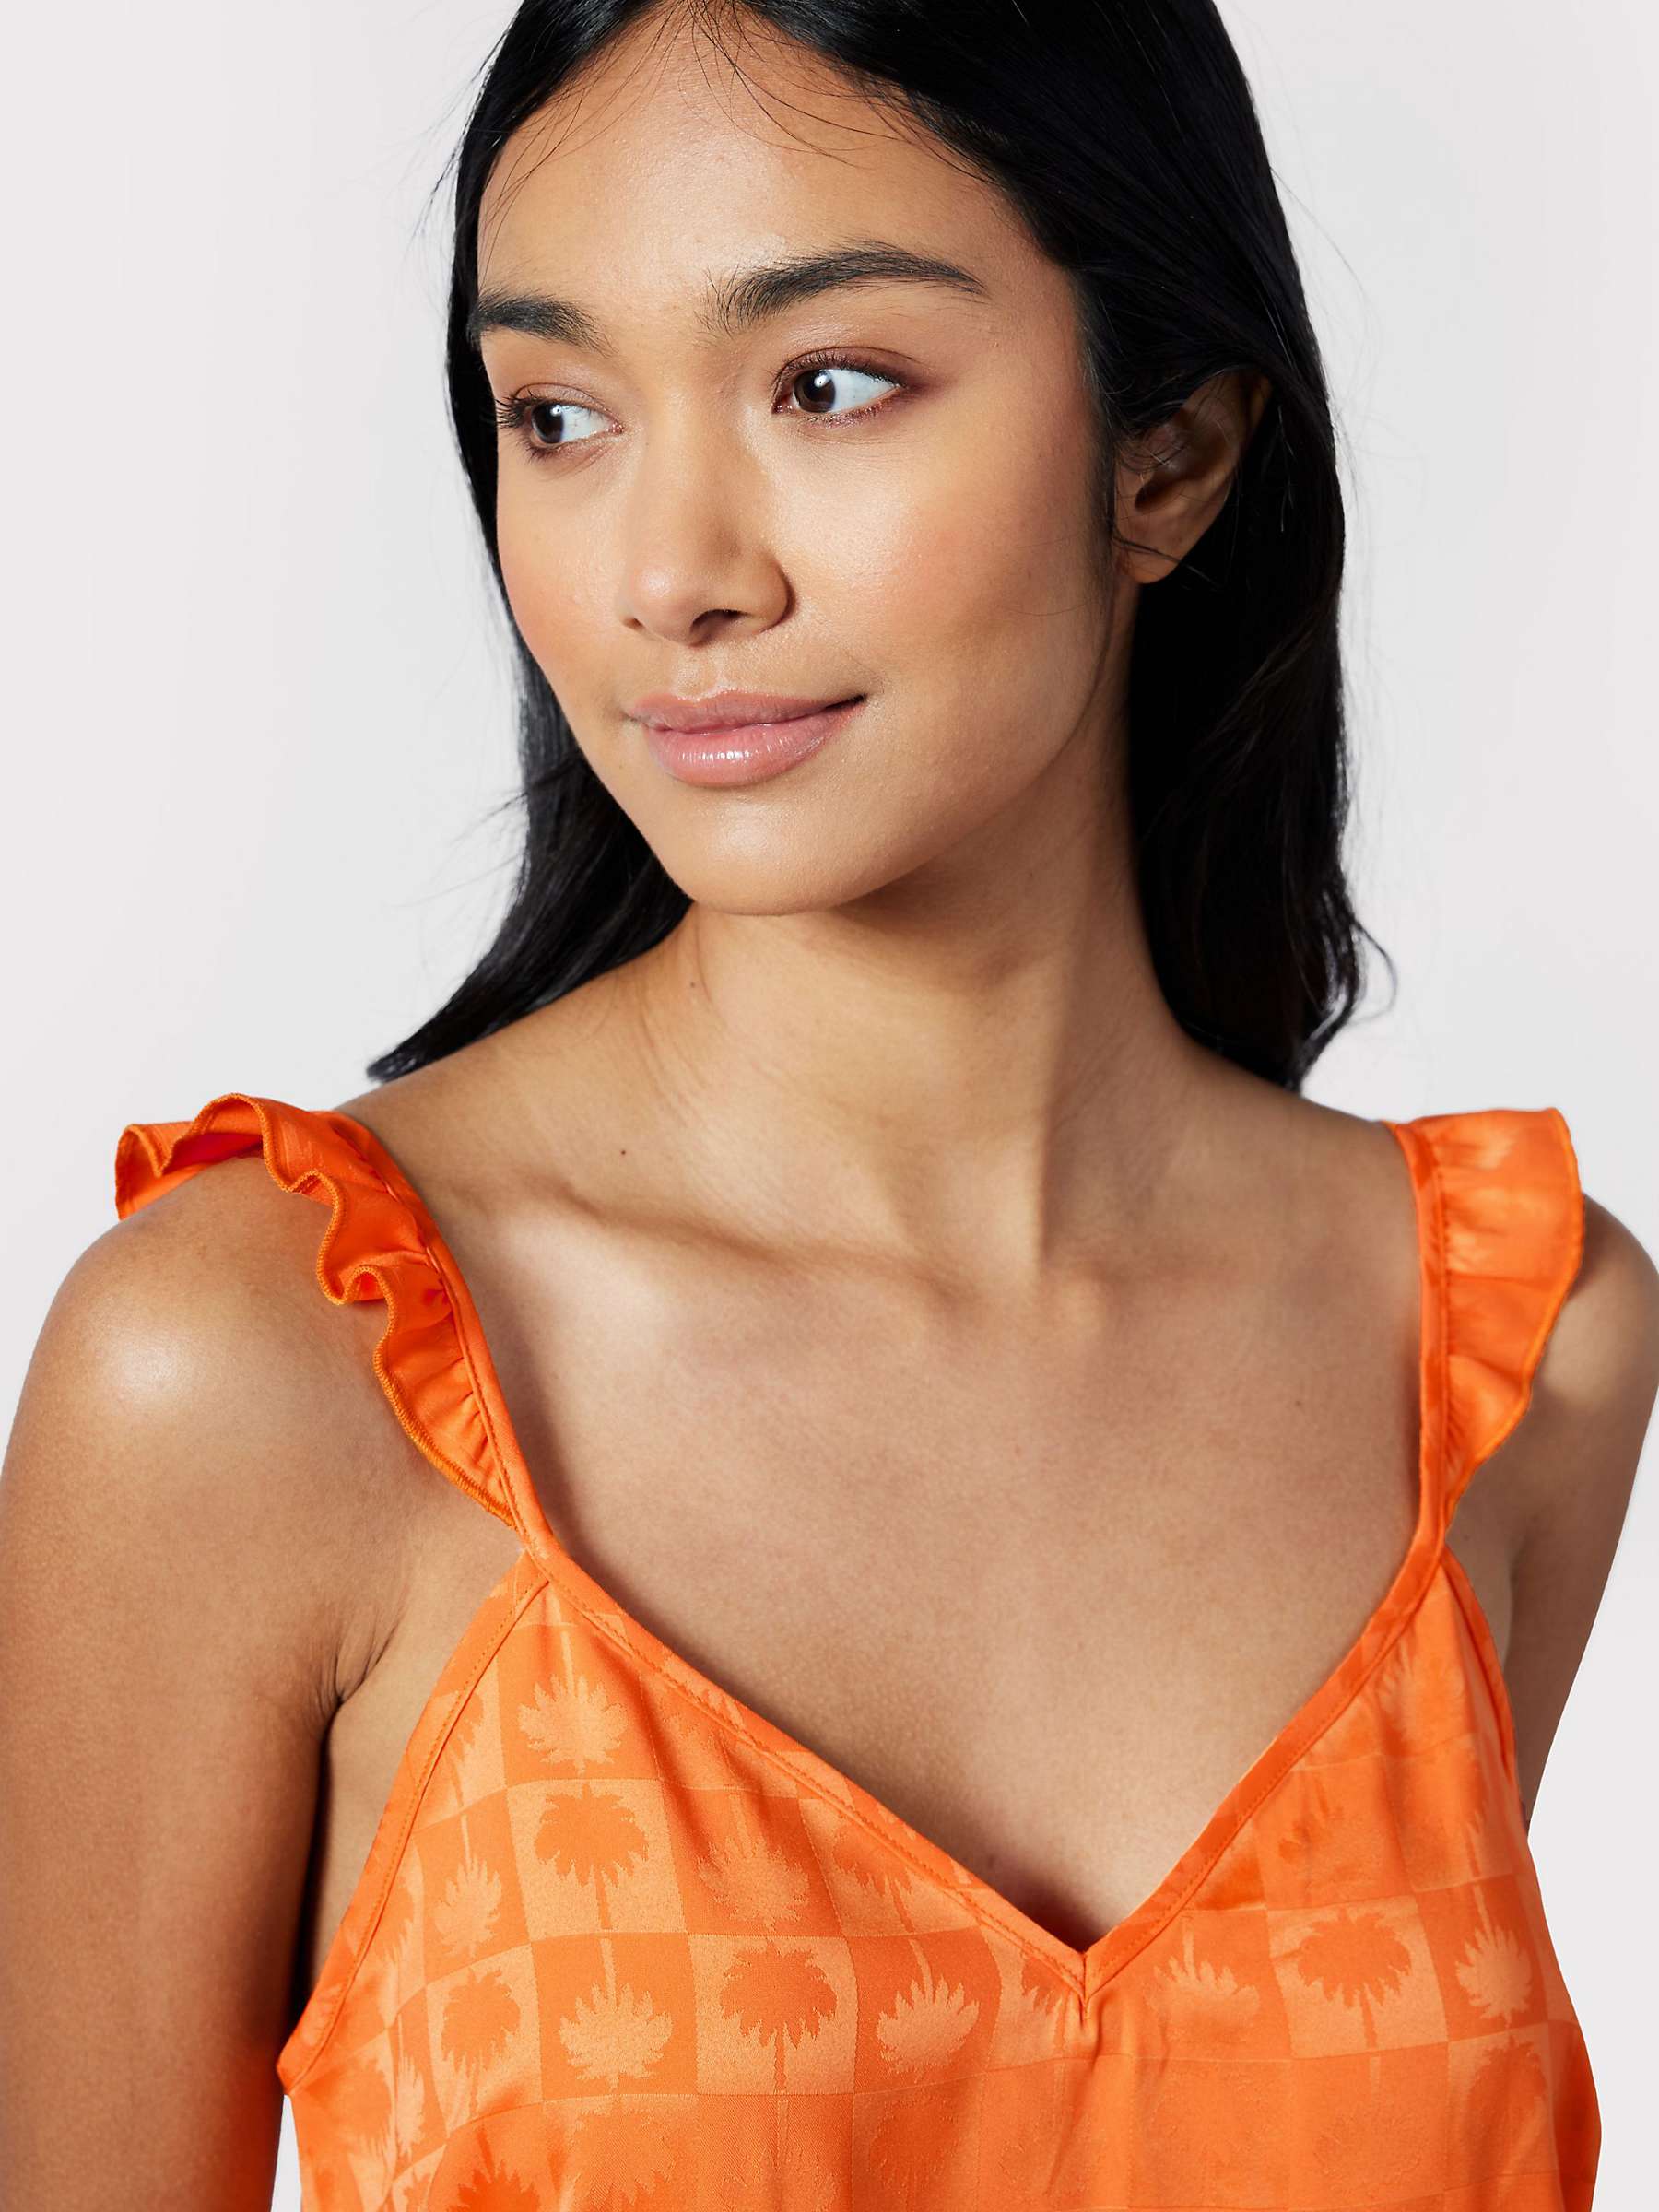 Buy Chelsea Peers Satin Jacquard Palm Short Pyjamas, Orange Online at johnlewis.com